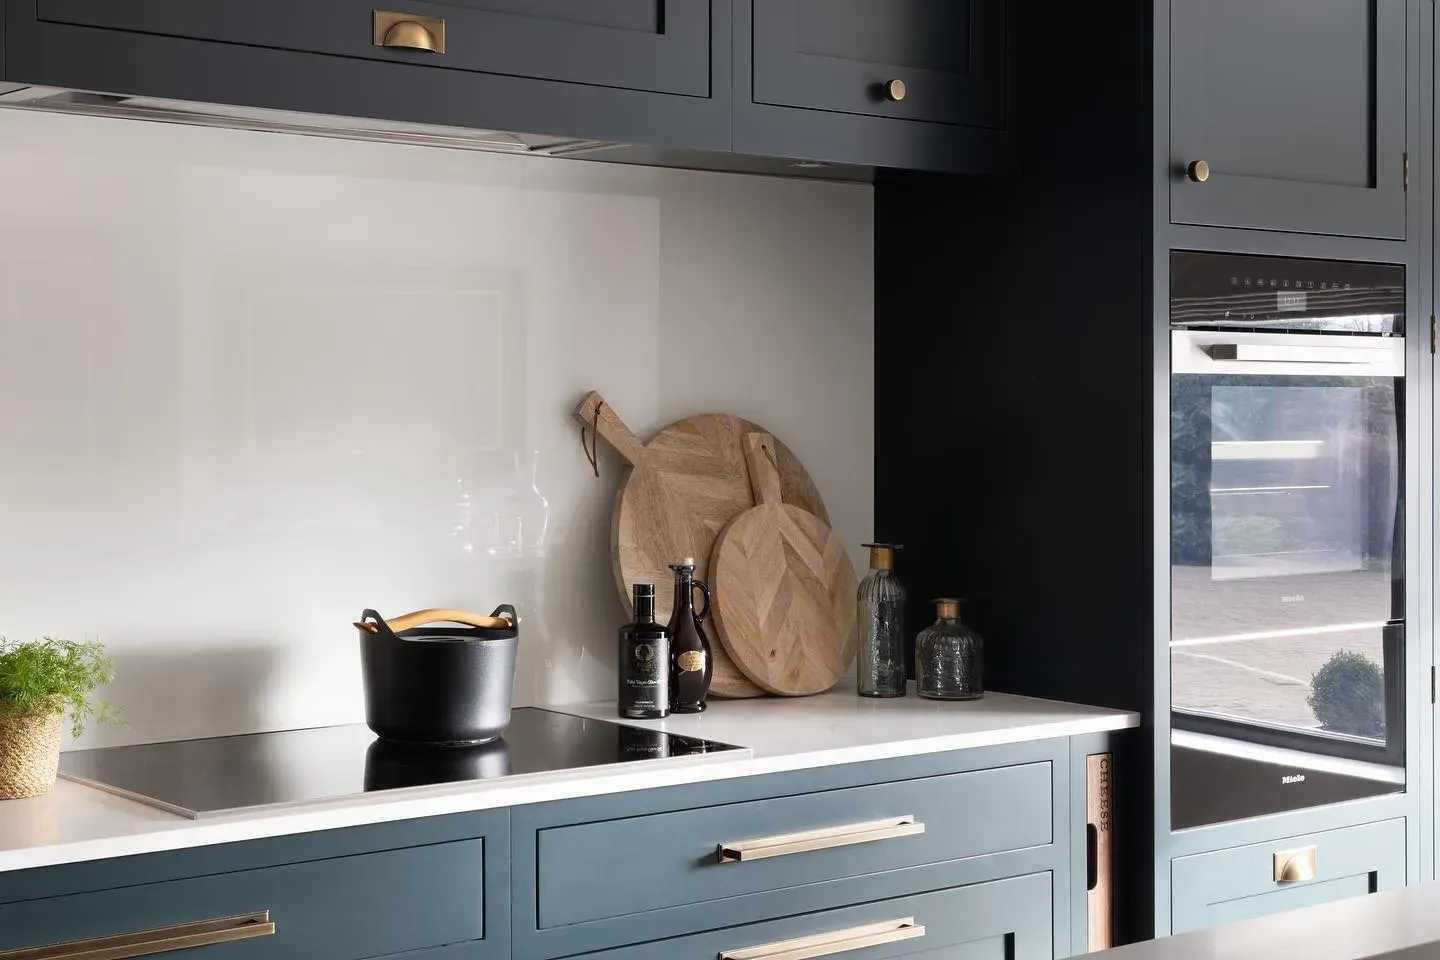 Benjamin Moore Regent Green kitchen cabinets color review